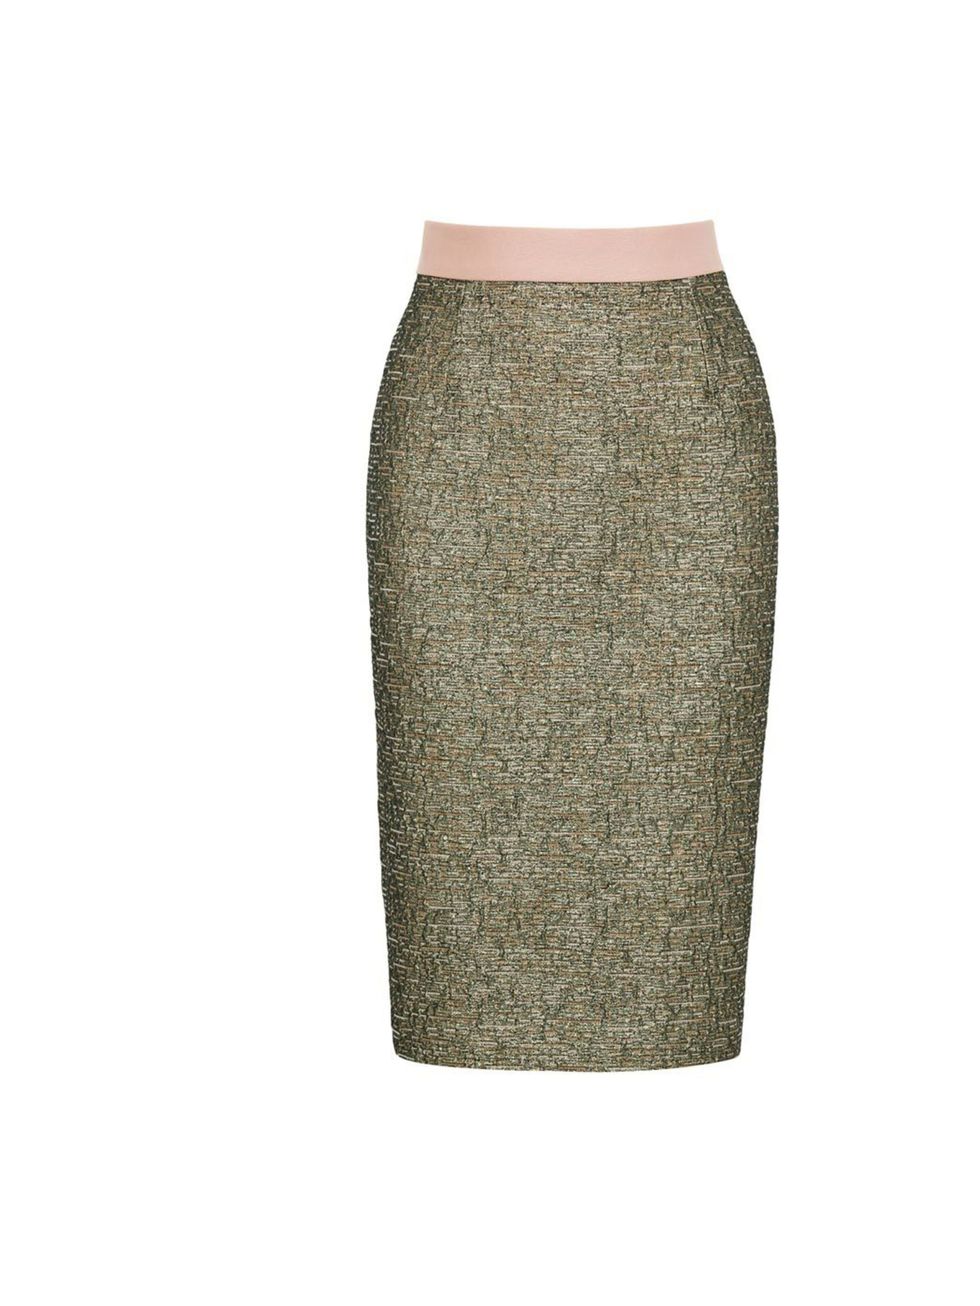 <p>Malene Birger metallic skirt, £189, at Fenwick, for stockists call 0207 629 9161</p>